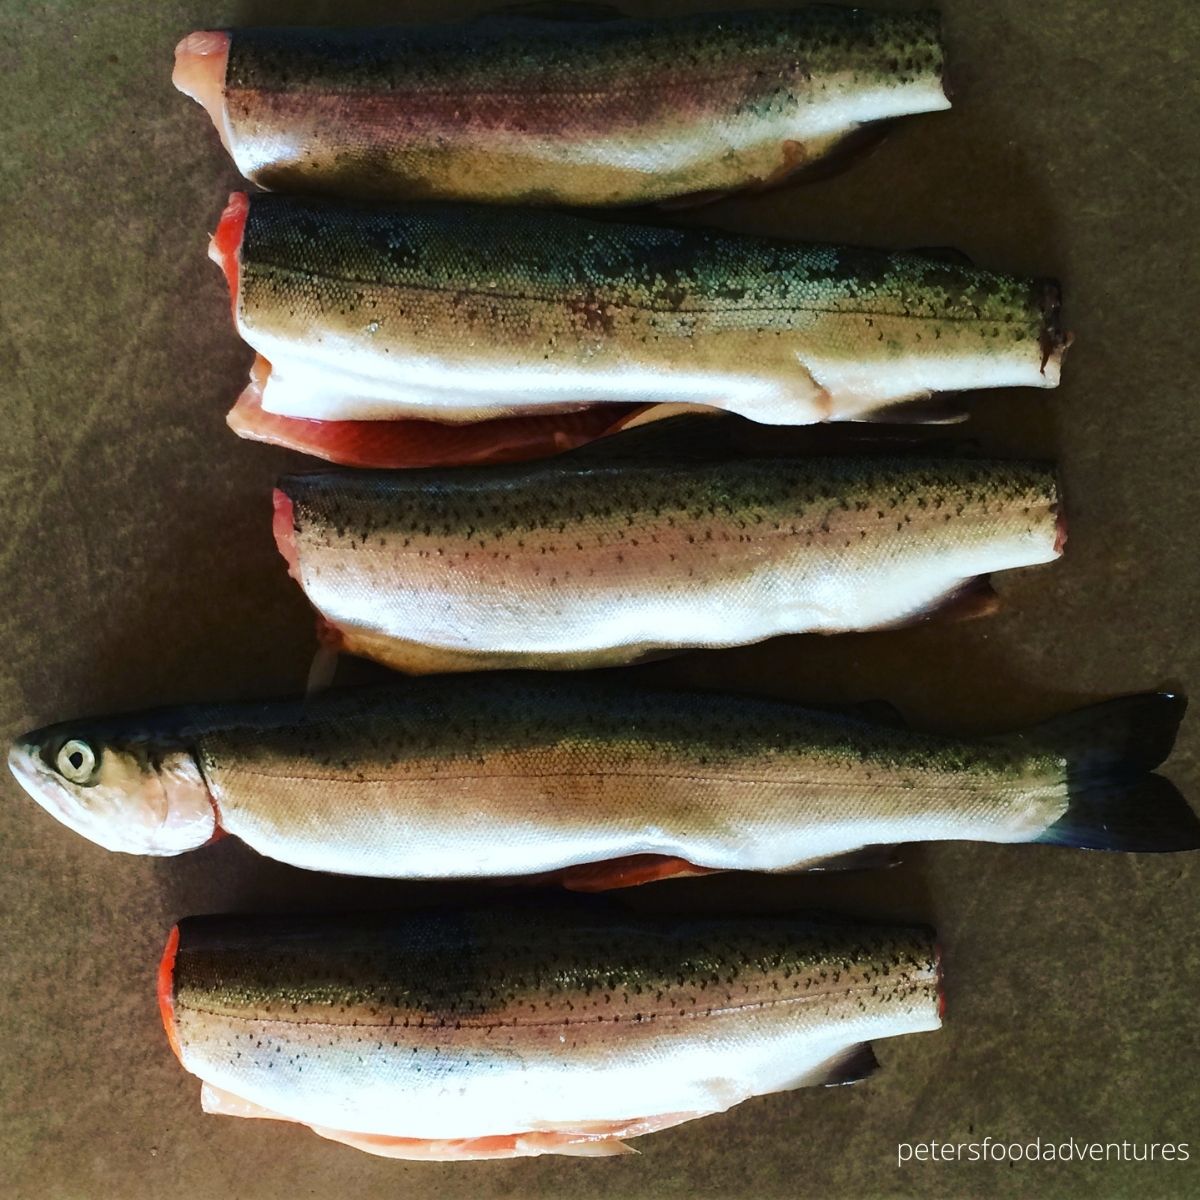 5 whole lake trout on a cutting board